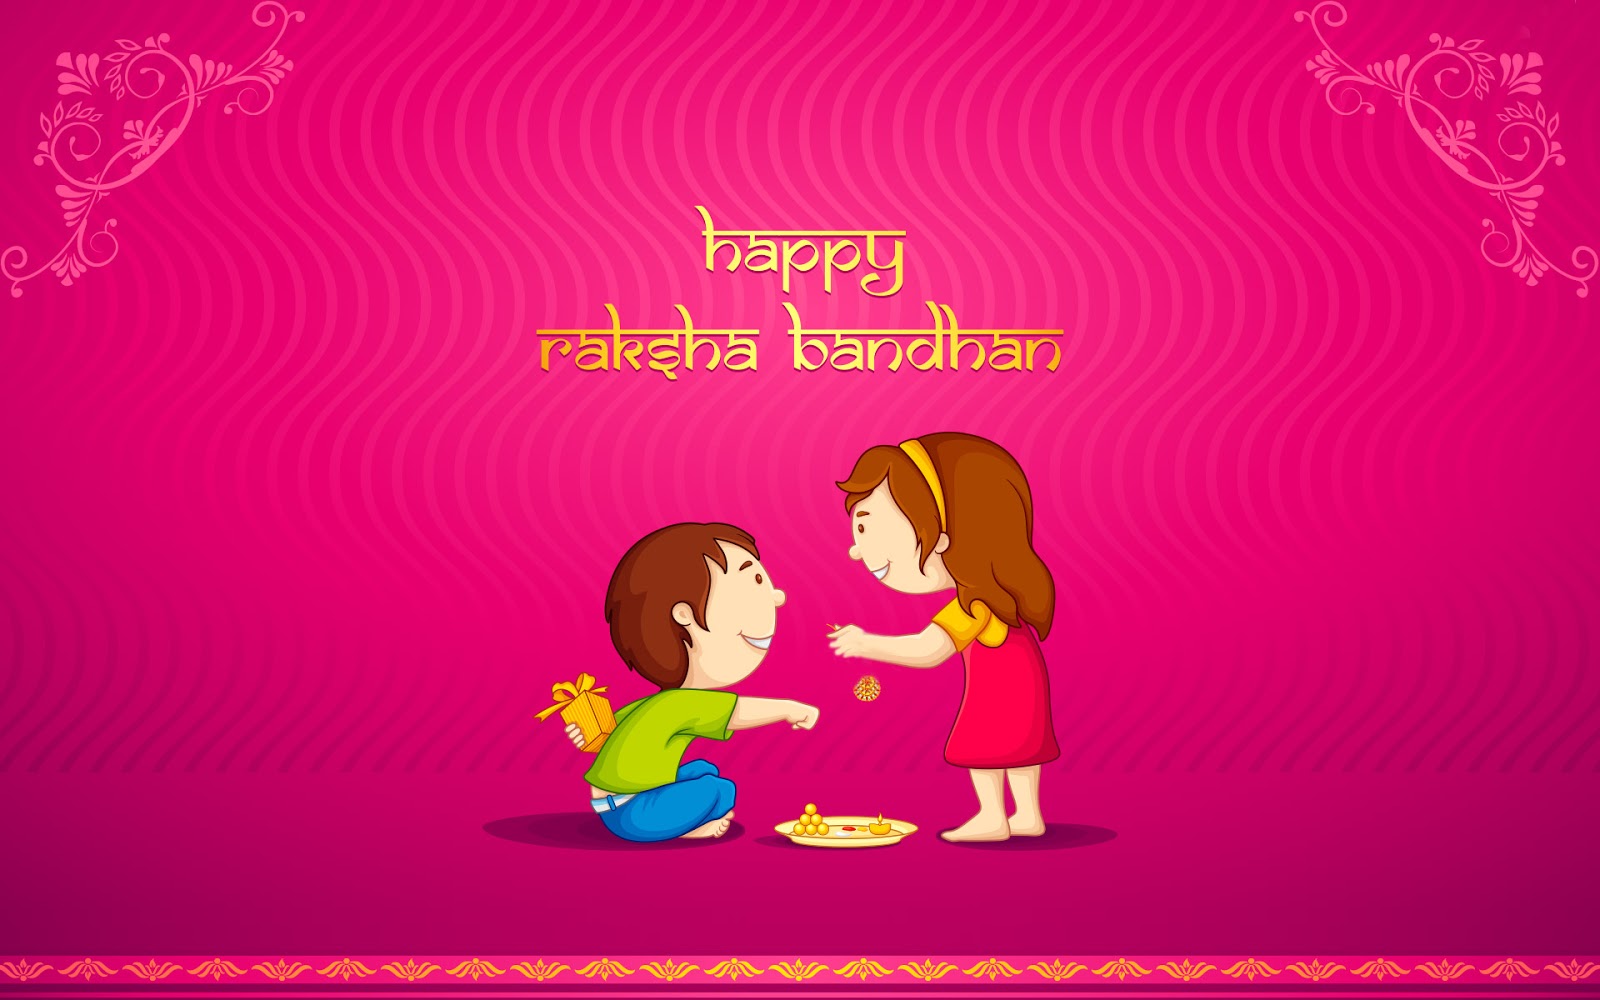 Raksha Bandhan celebrations at home